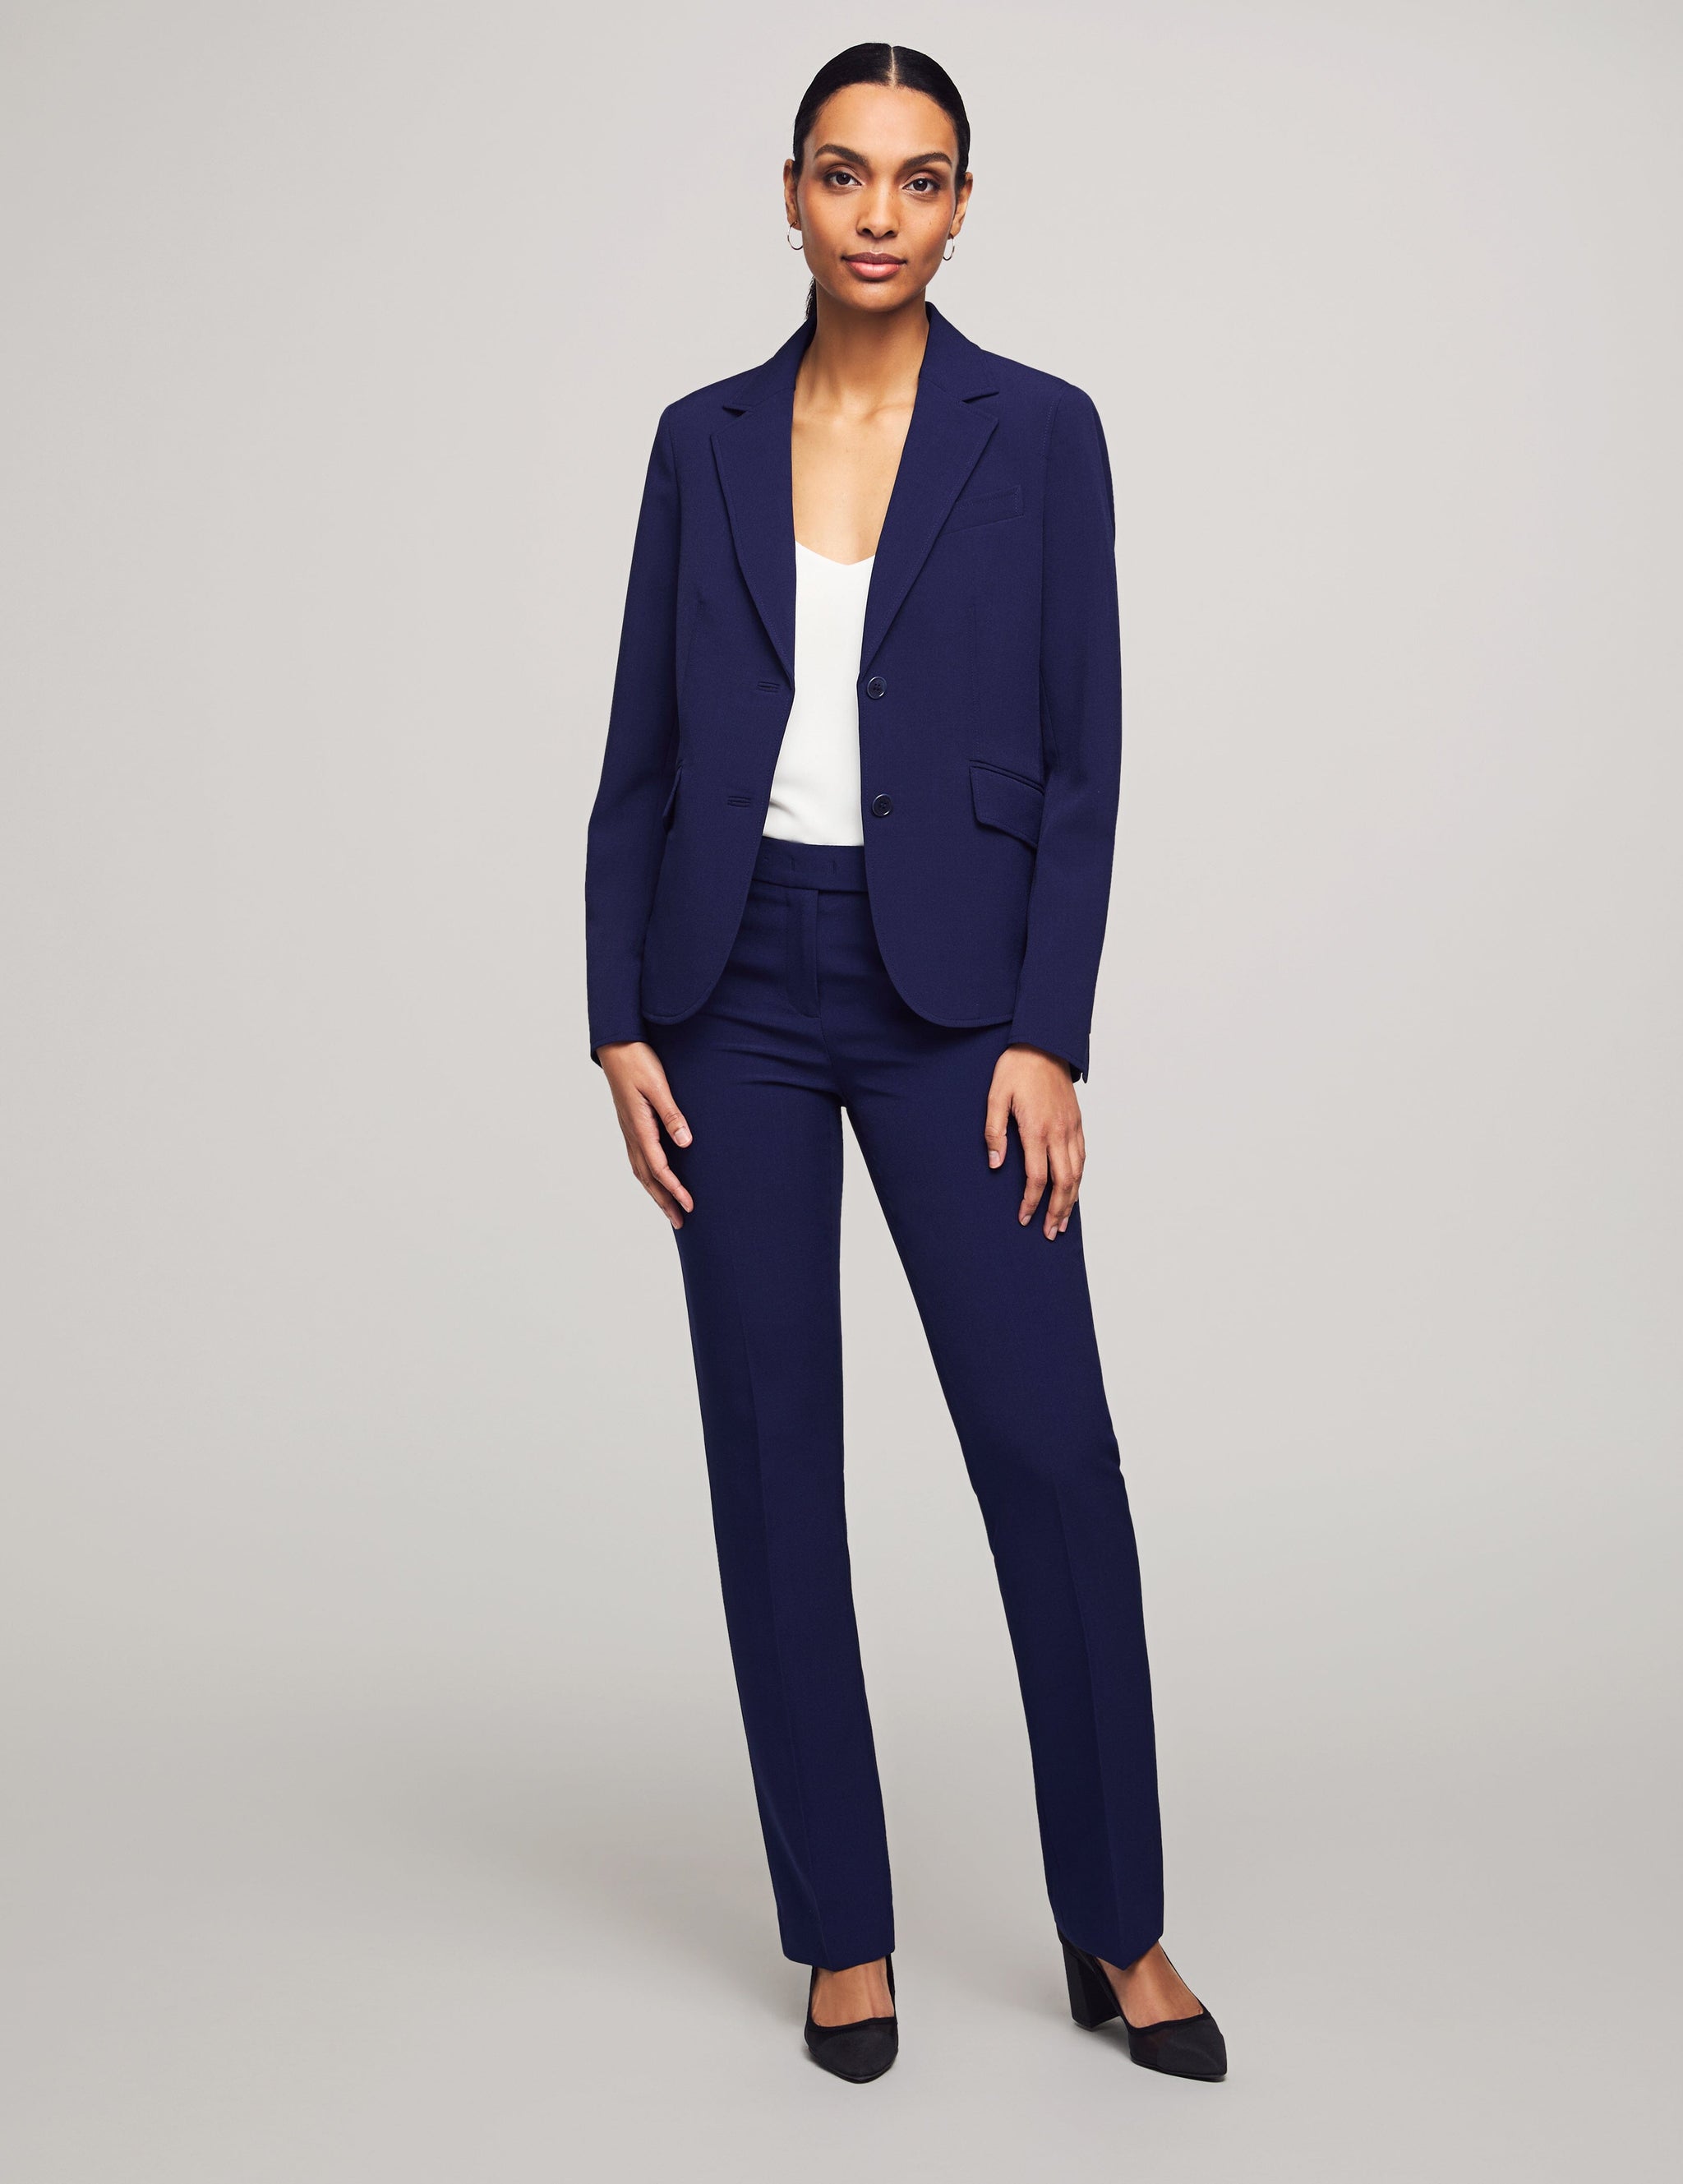 LSSJLUH Office Work Pants Suit Women Business Suit Lady 2 Female Uniform Set  Piece Blazer Pants Jacket Autumn Winter Large size price in UAE | Amazon  UAE | kanbkam